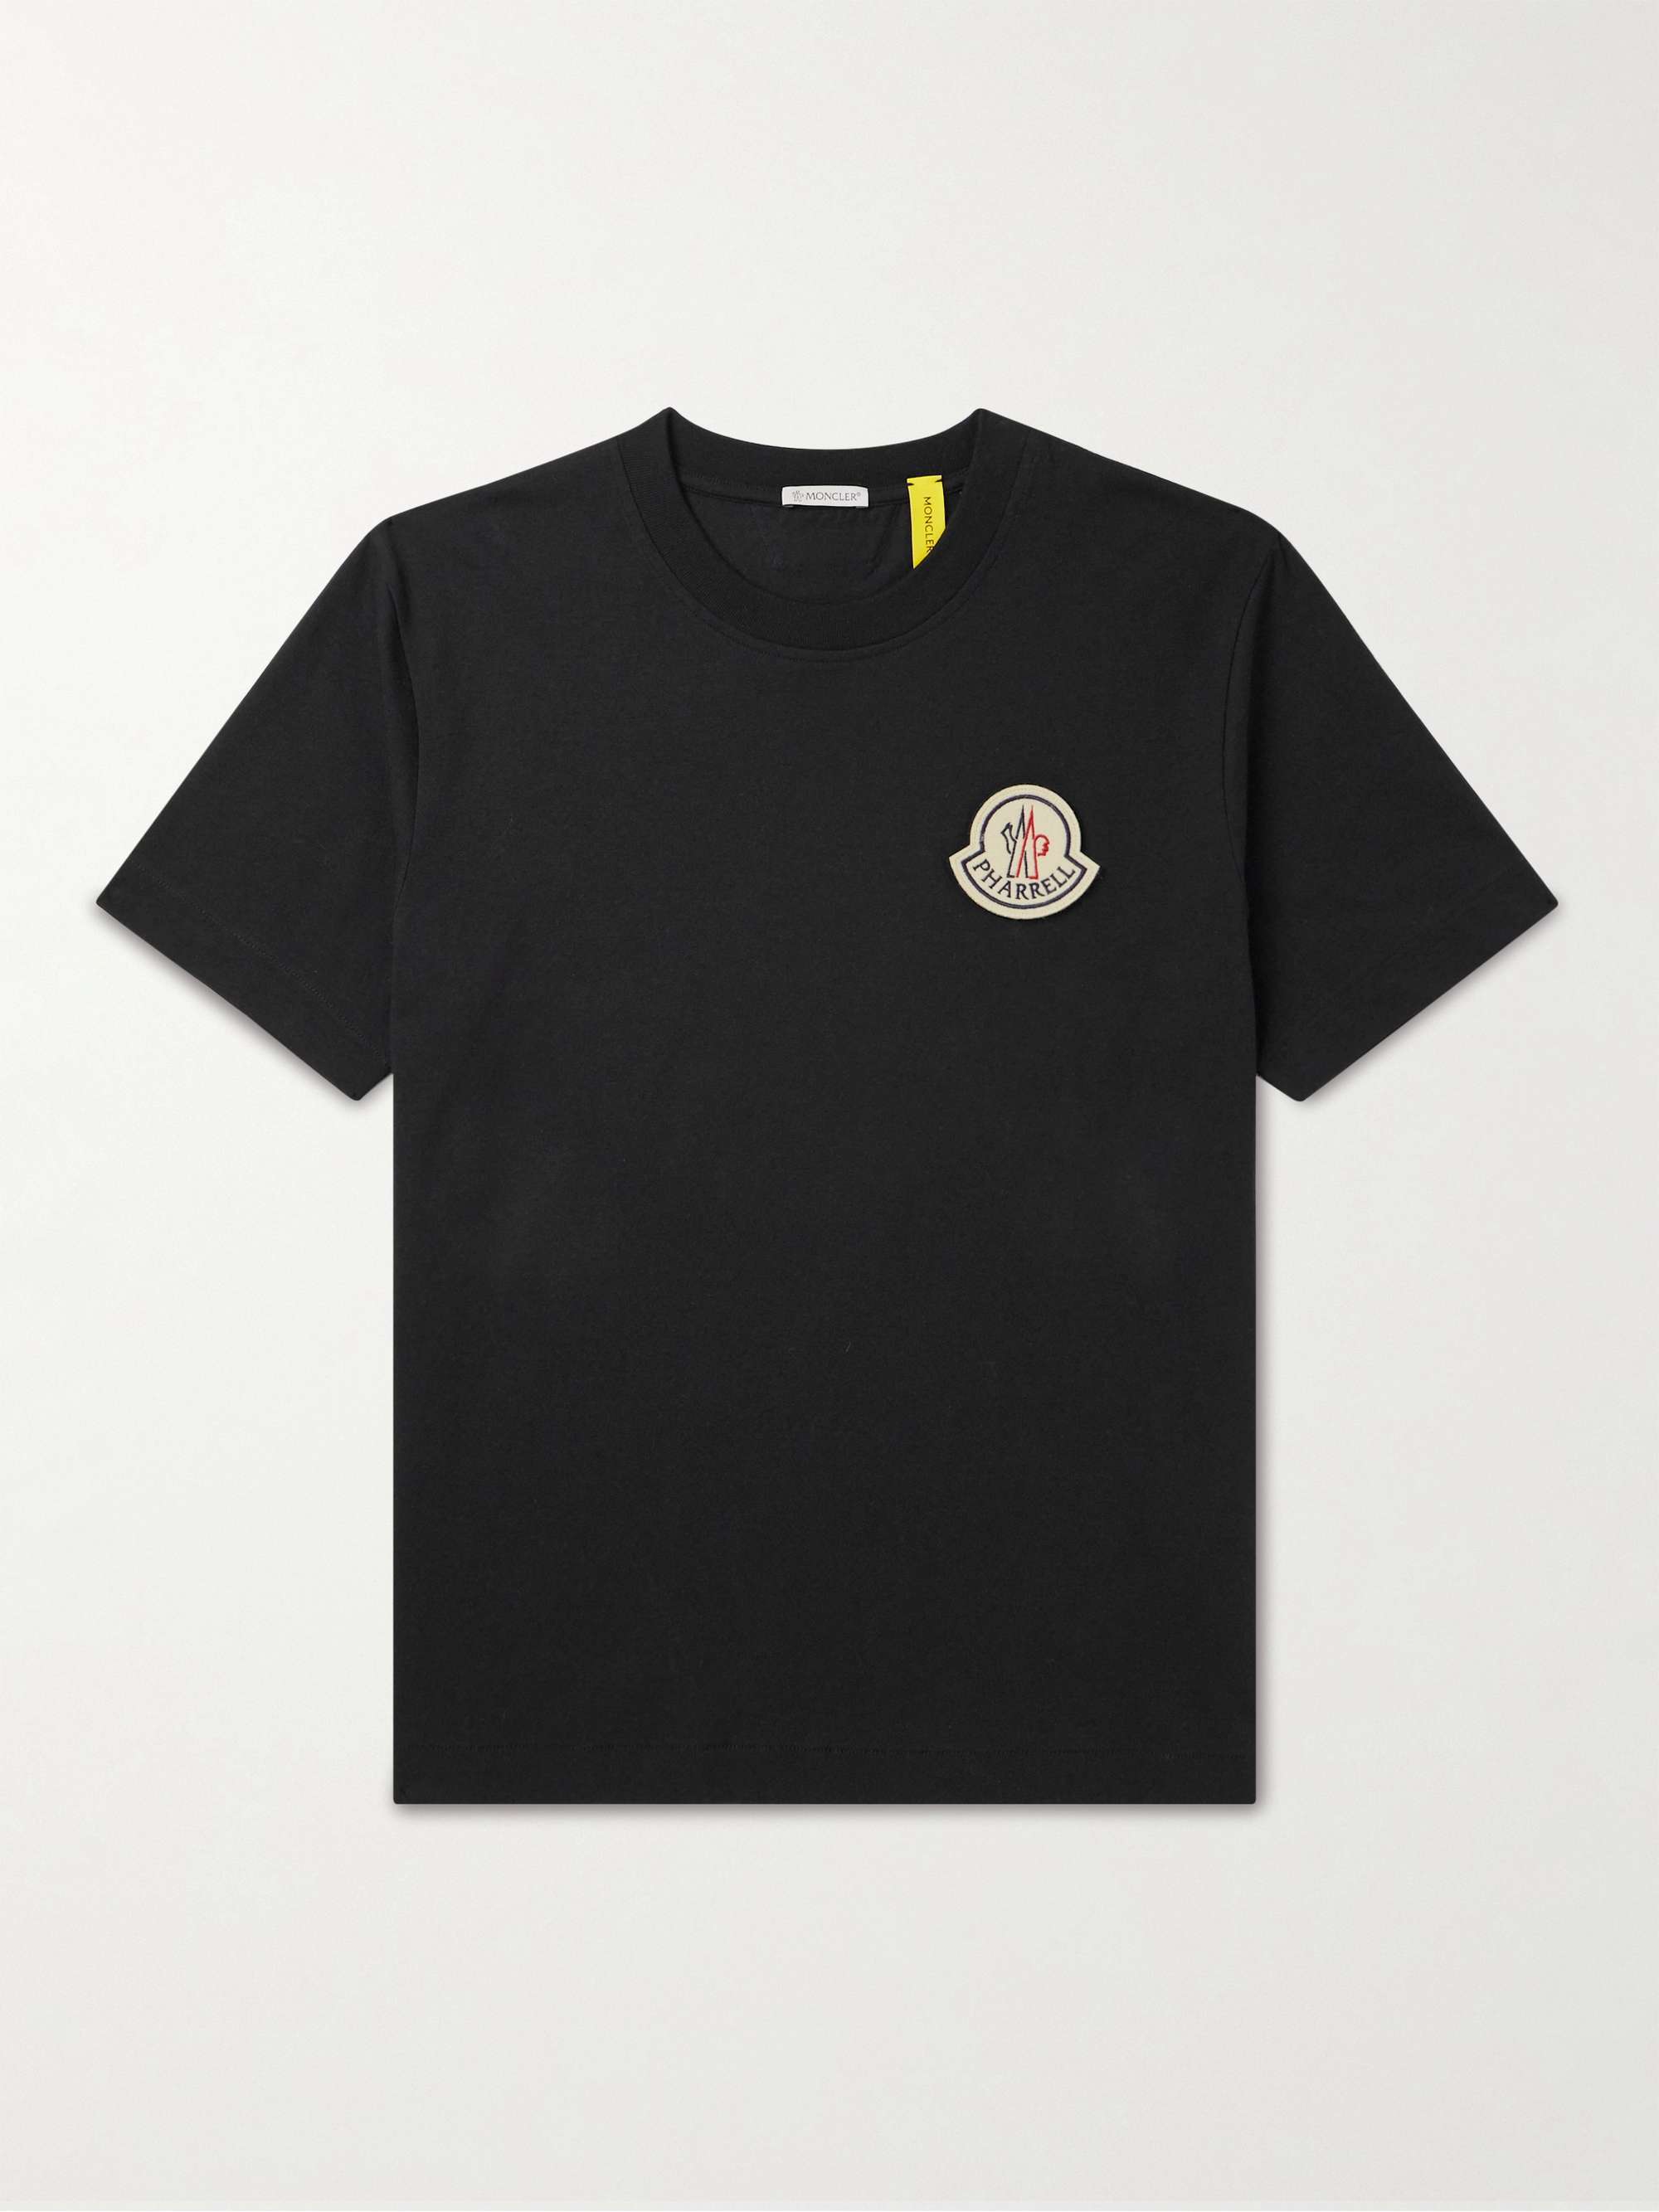 MONCLER GENIUS + Pharrell Williams Logo-Appliquéd Cotton-Jersey T-Shirt for  Men | MR PORTER